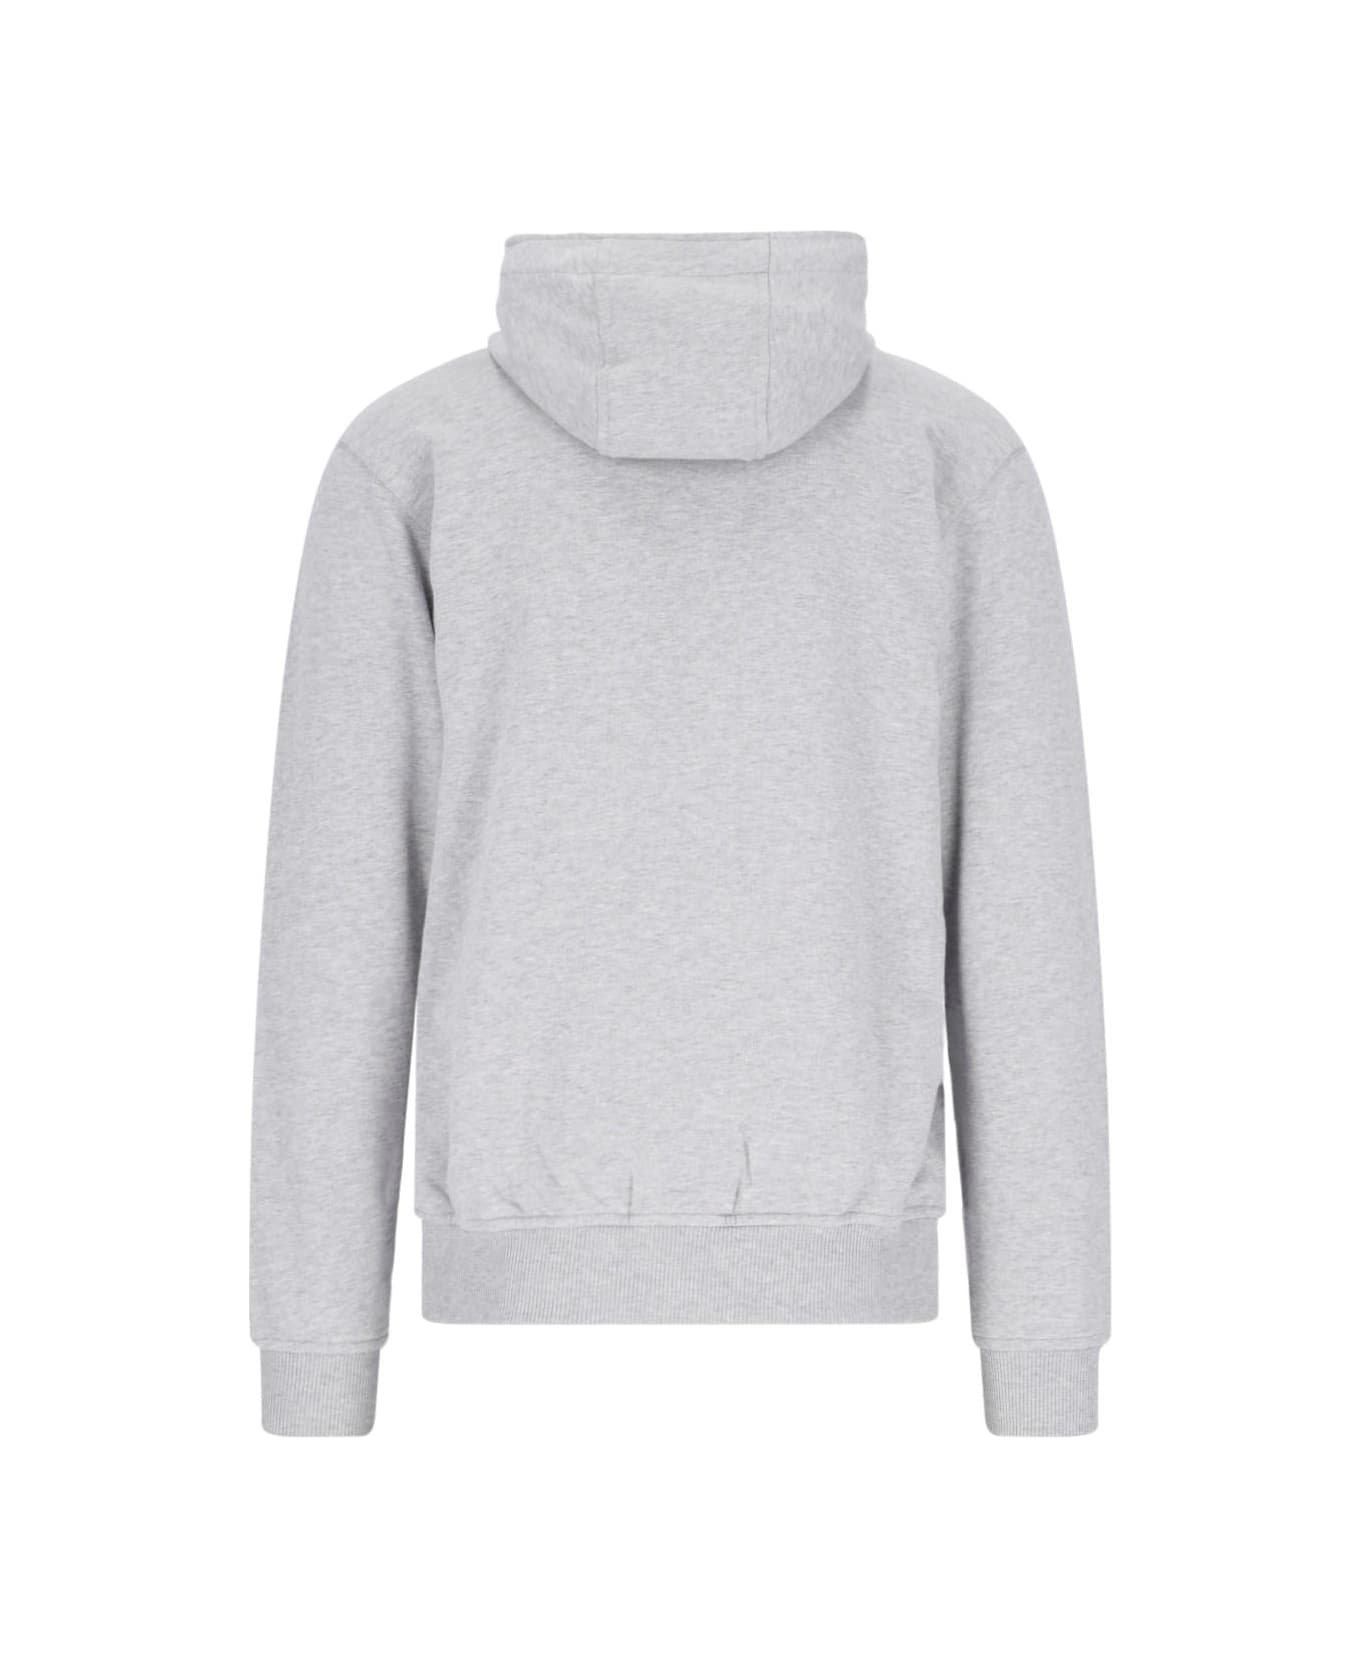 Comme des Garçons Shirt X Lacoste Logo Zip Sweatshirt - Top Grey